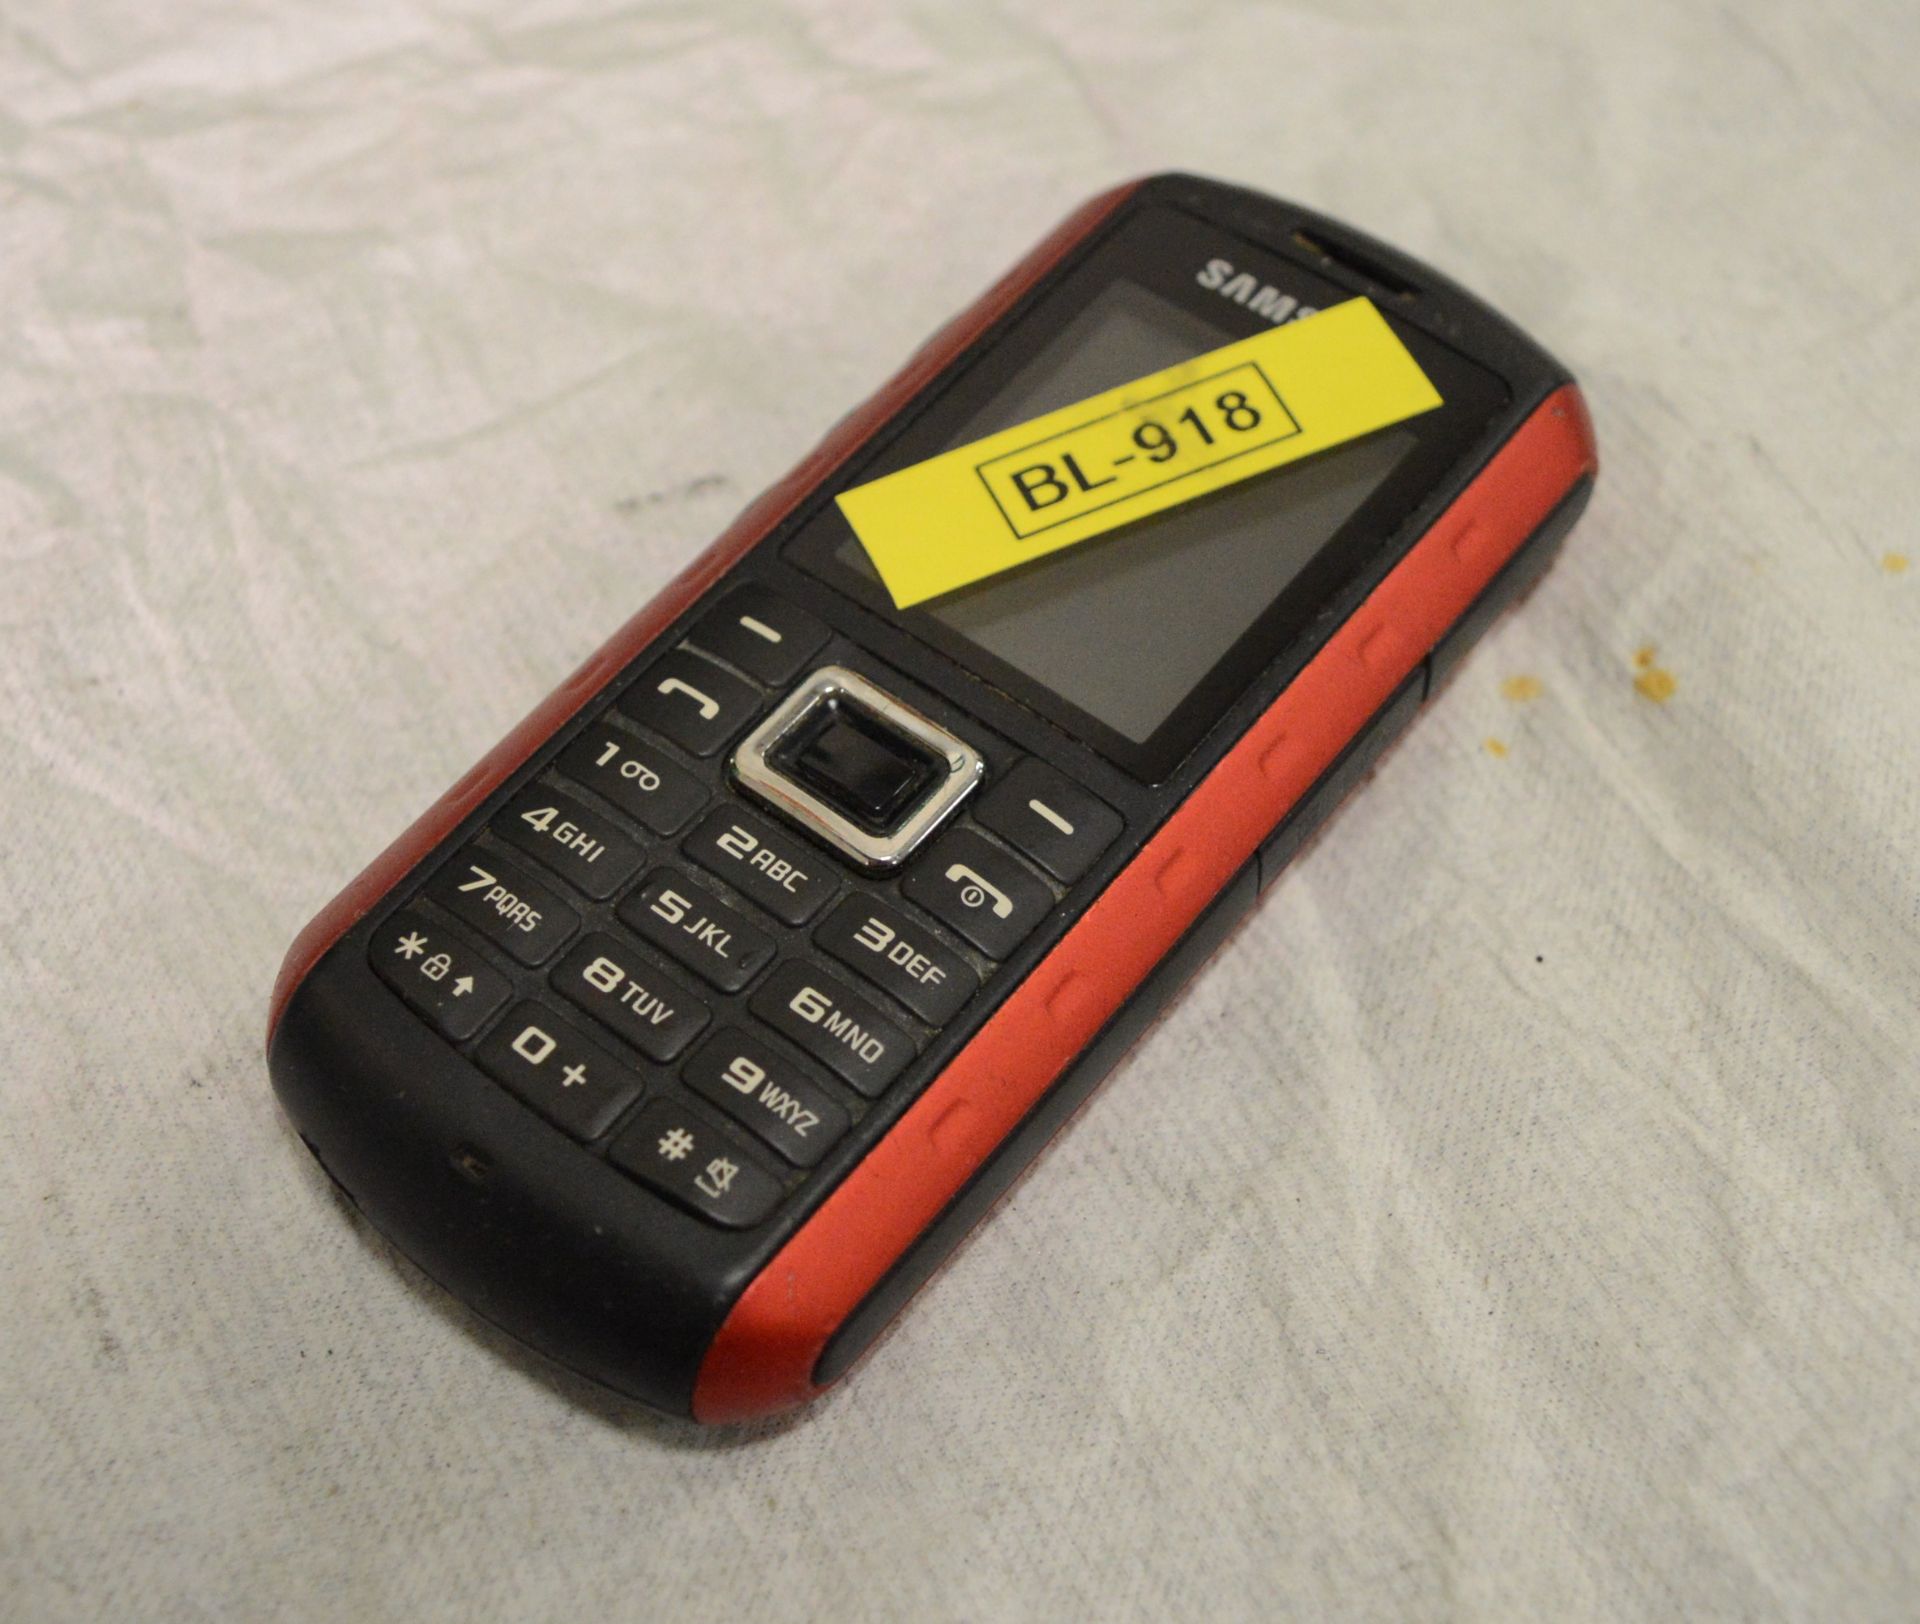 11x Samsung B2100 Mobile Phones. - Image 2 of 2